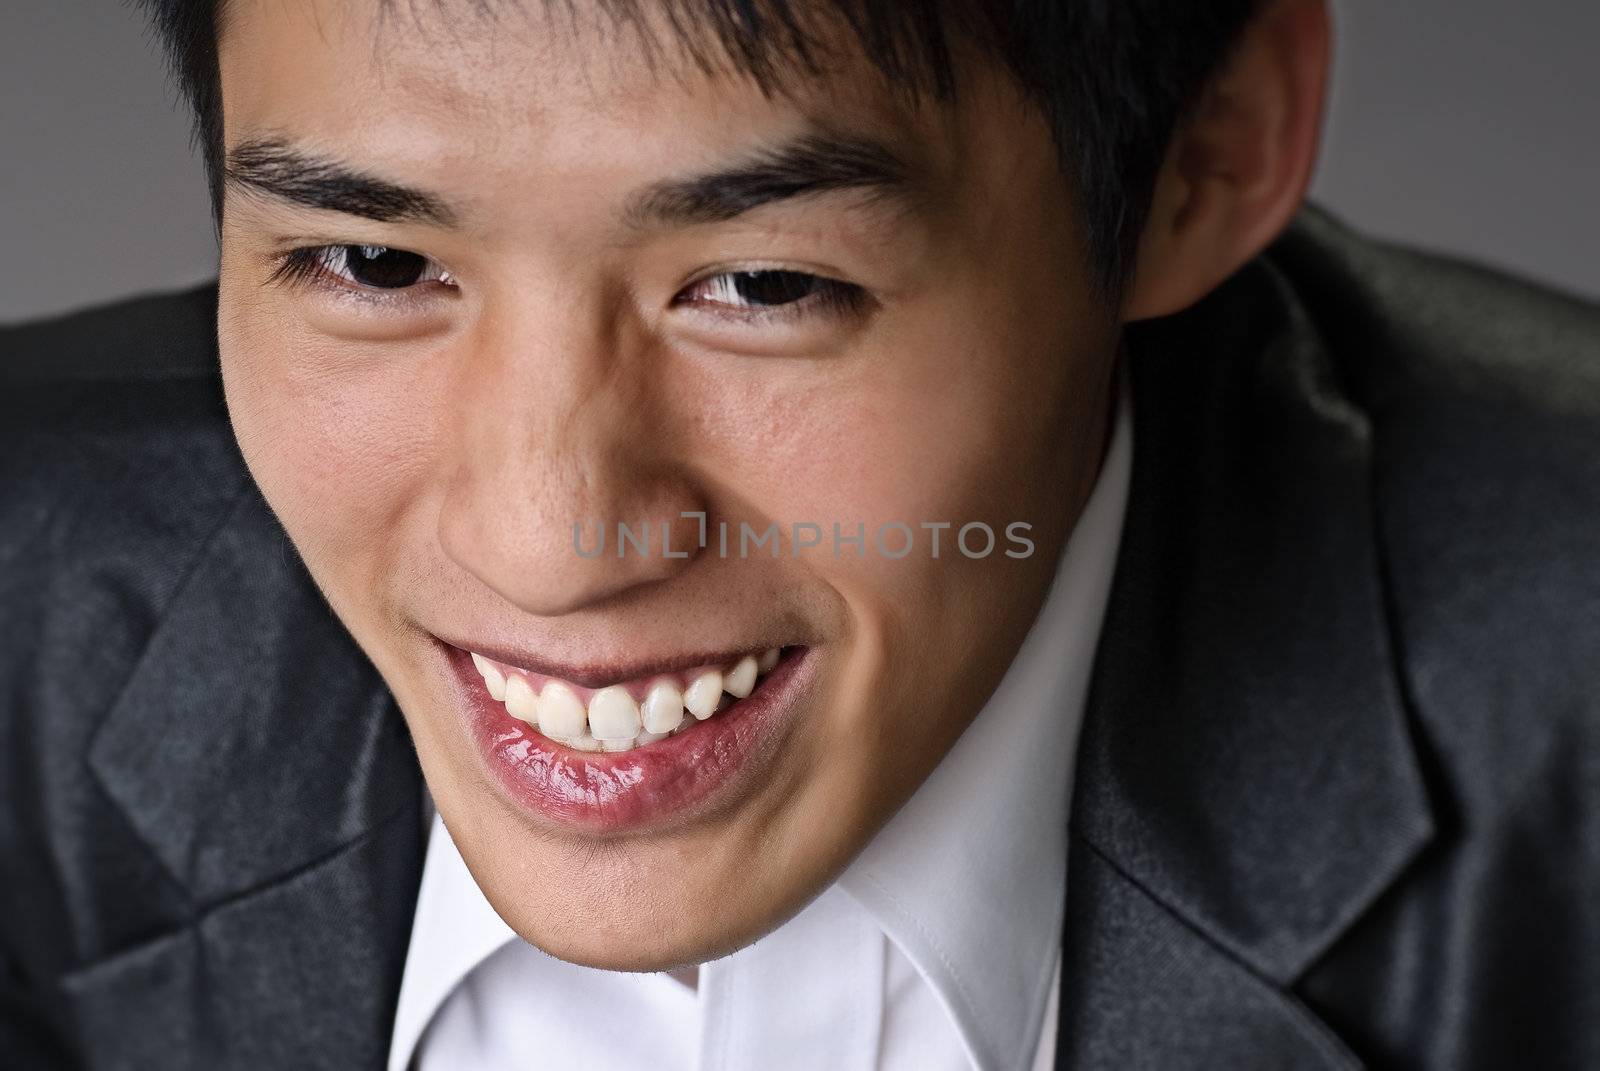 Smiling businessman face, closeup portrait with happy expression.